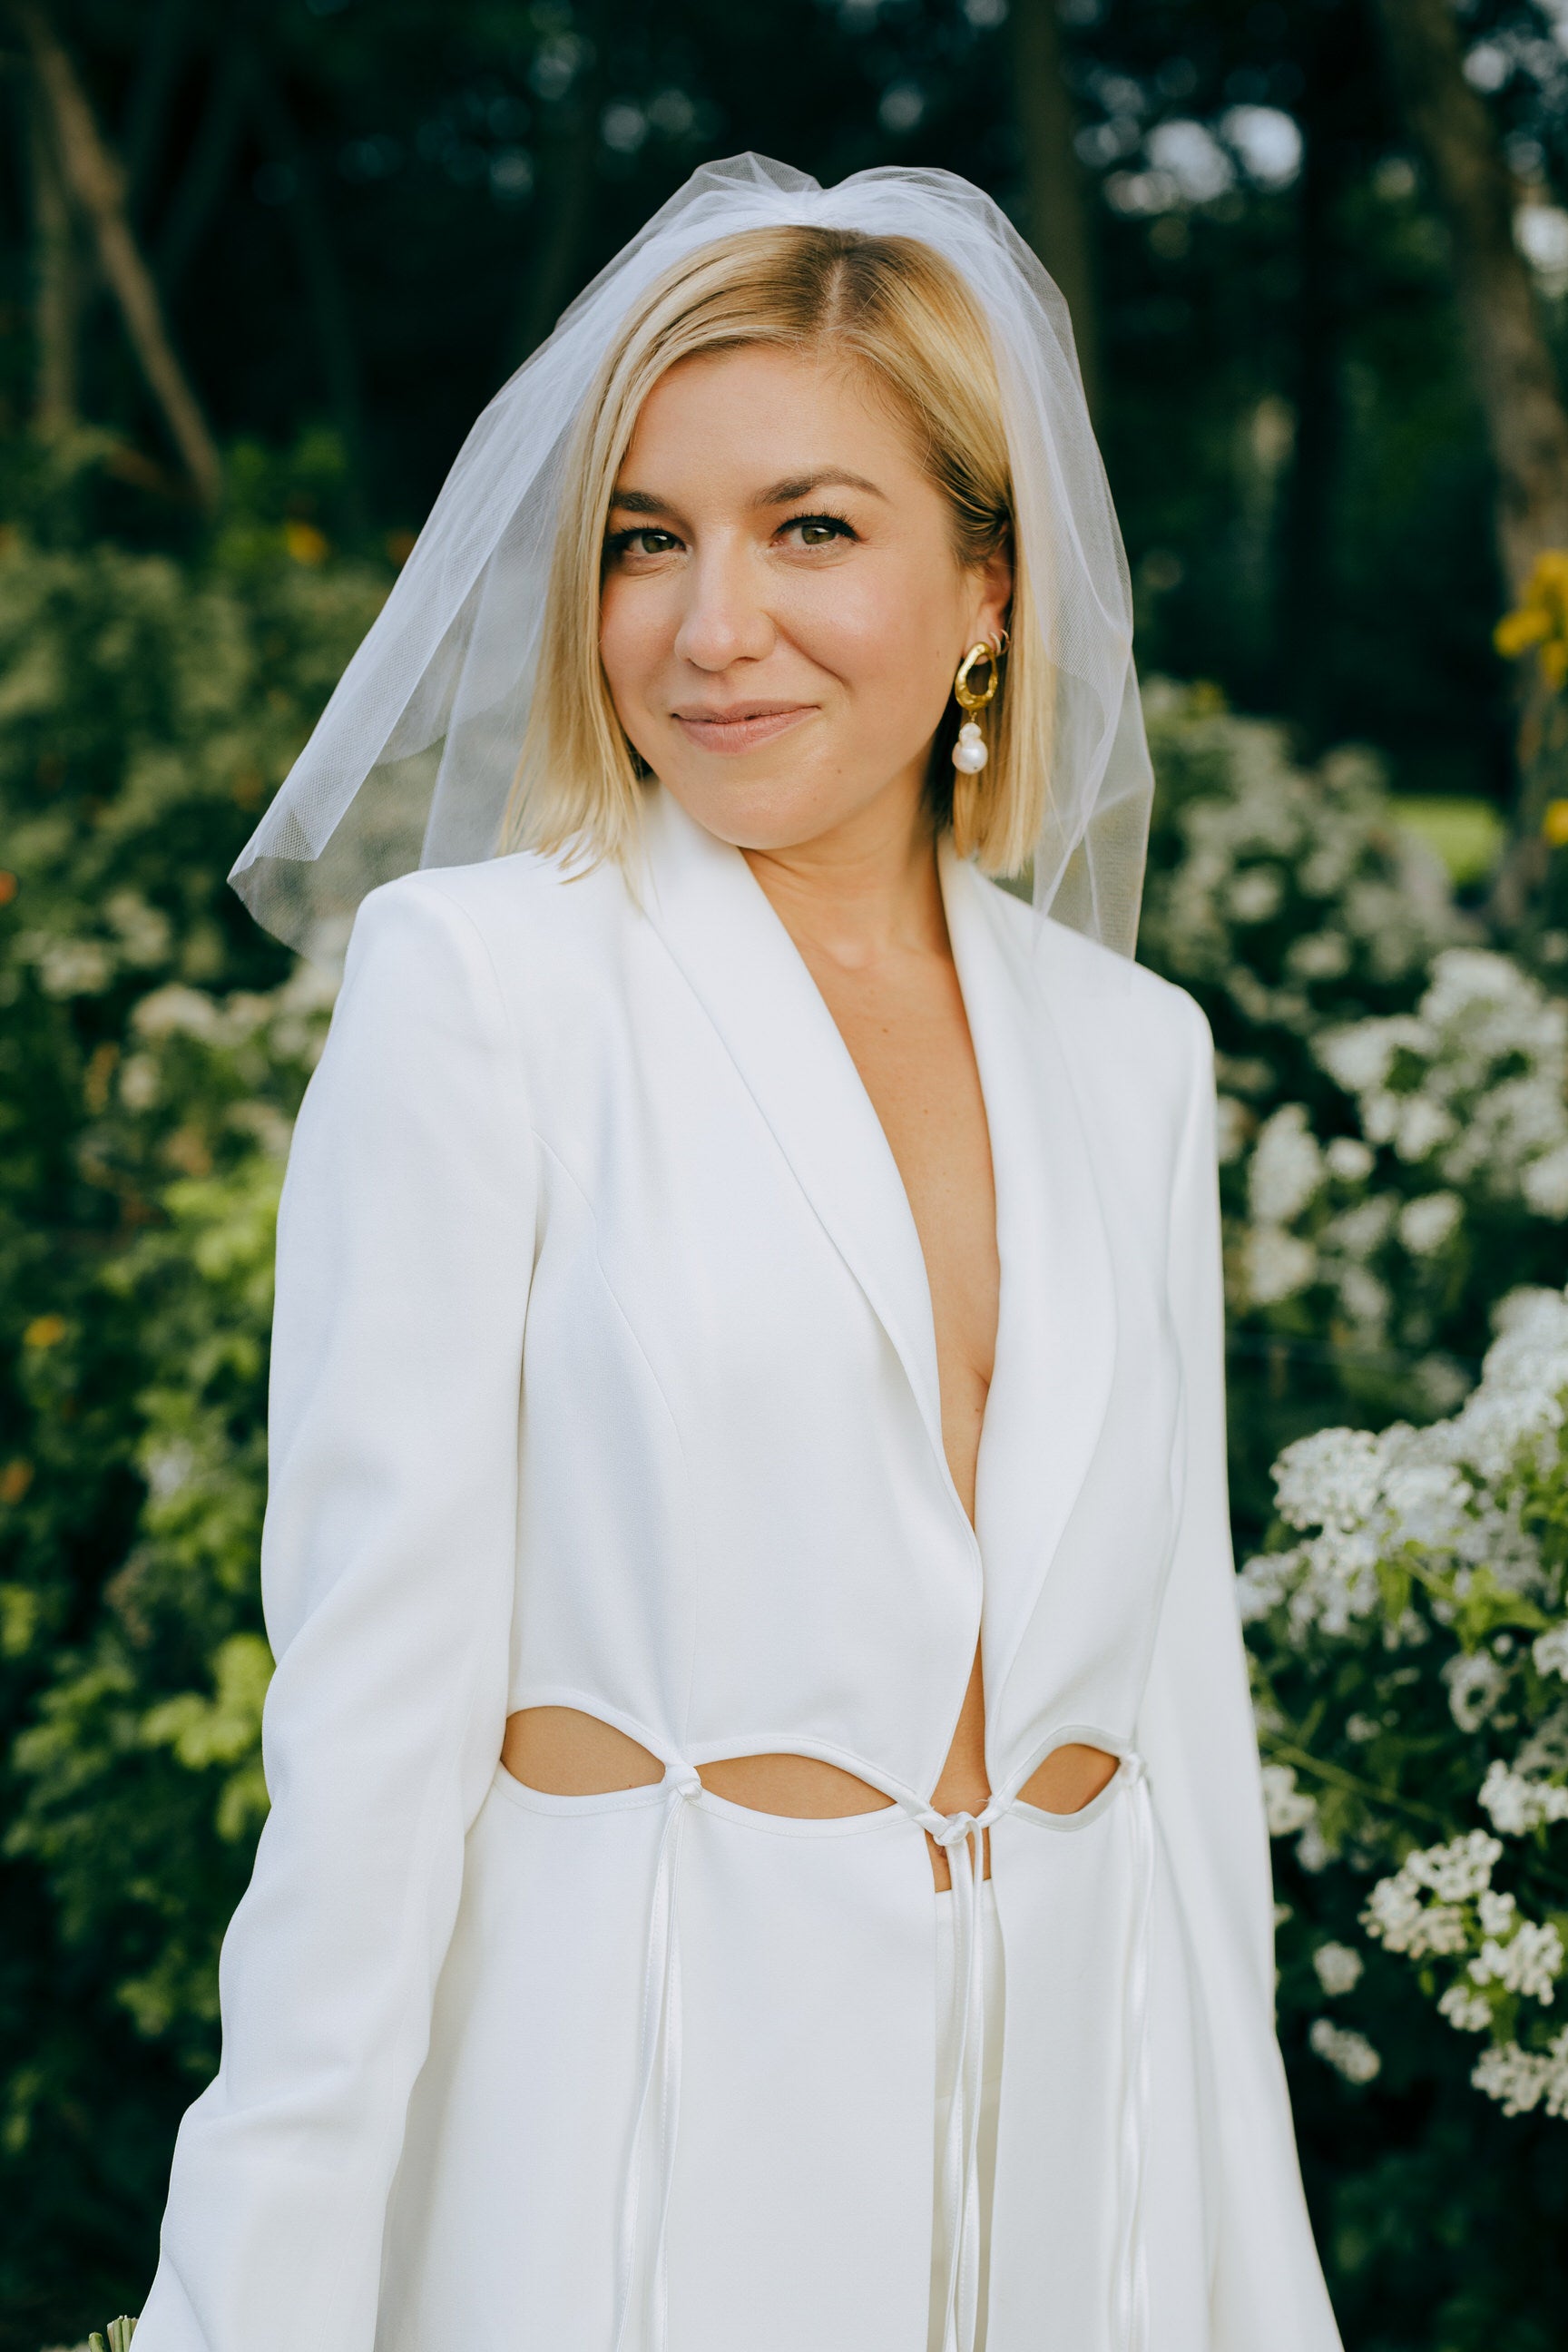 WEEPING CHERRY | embellished short wedding veil